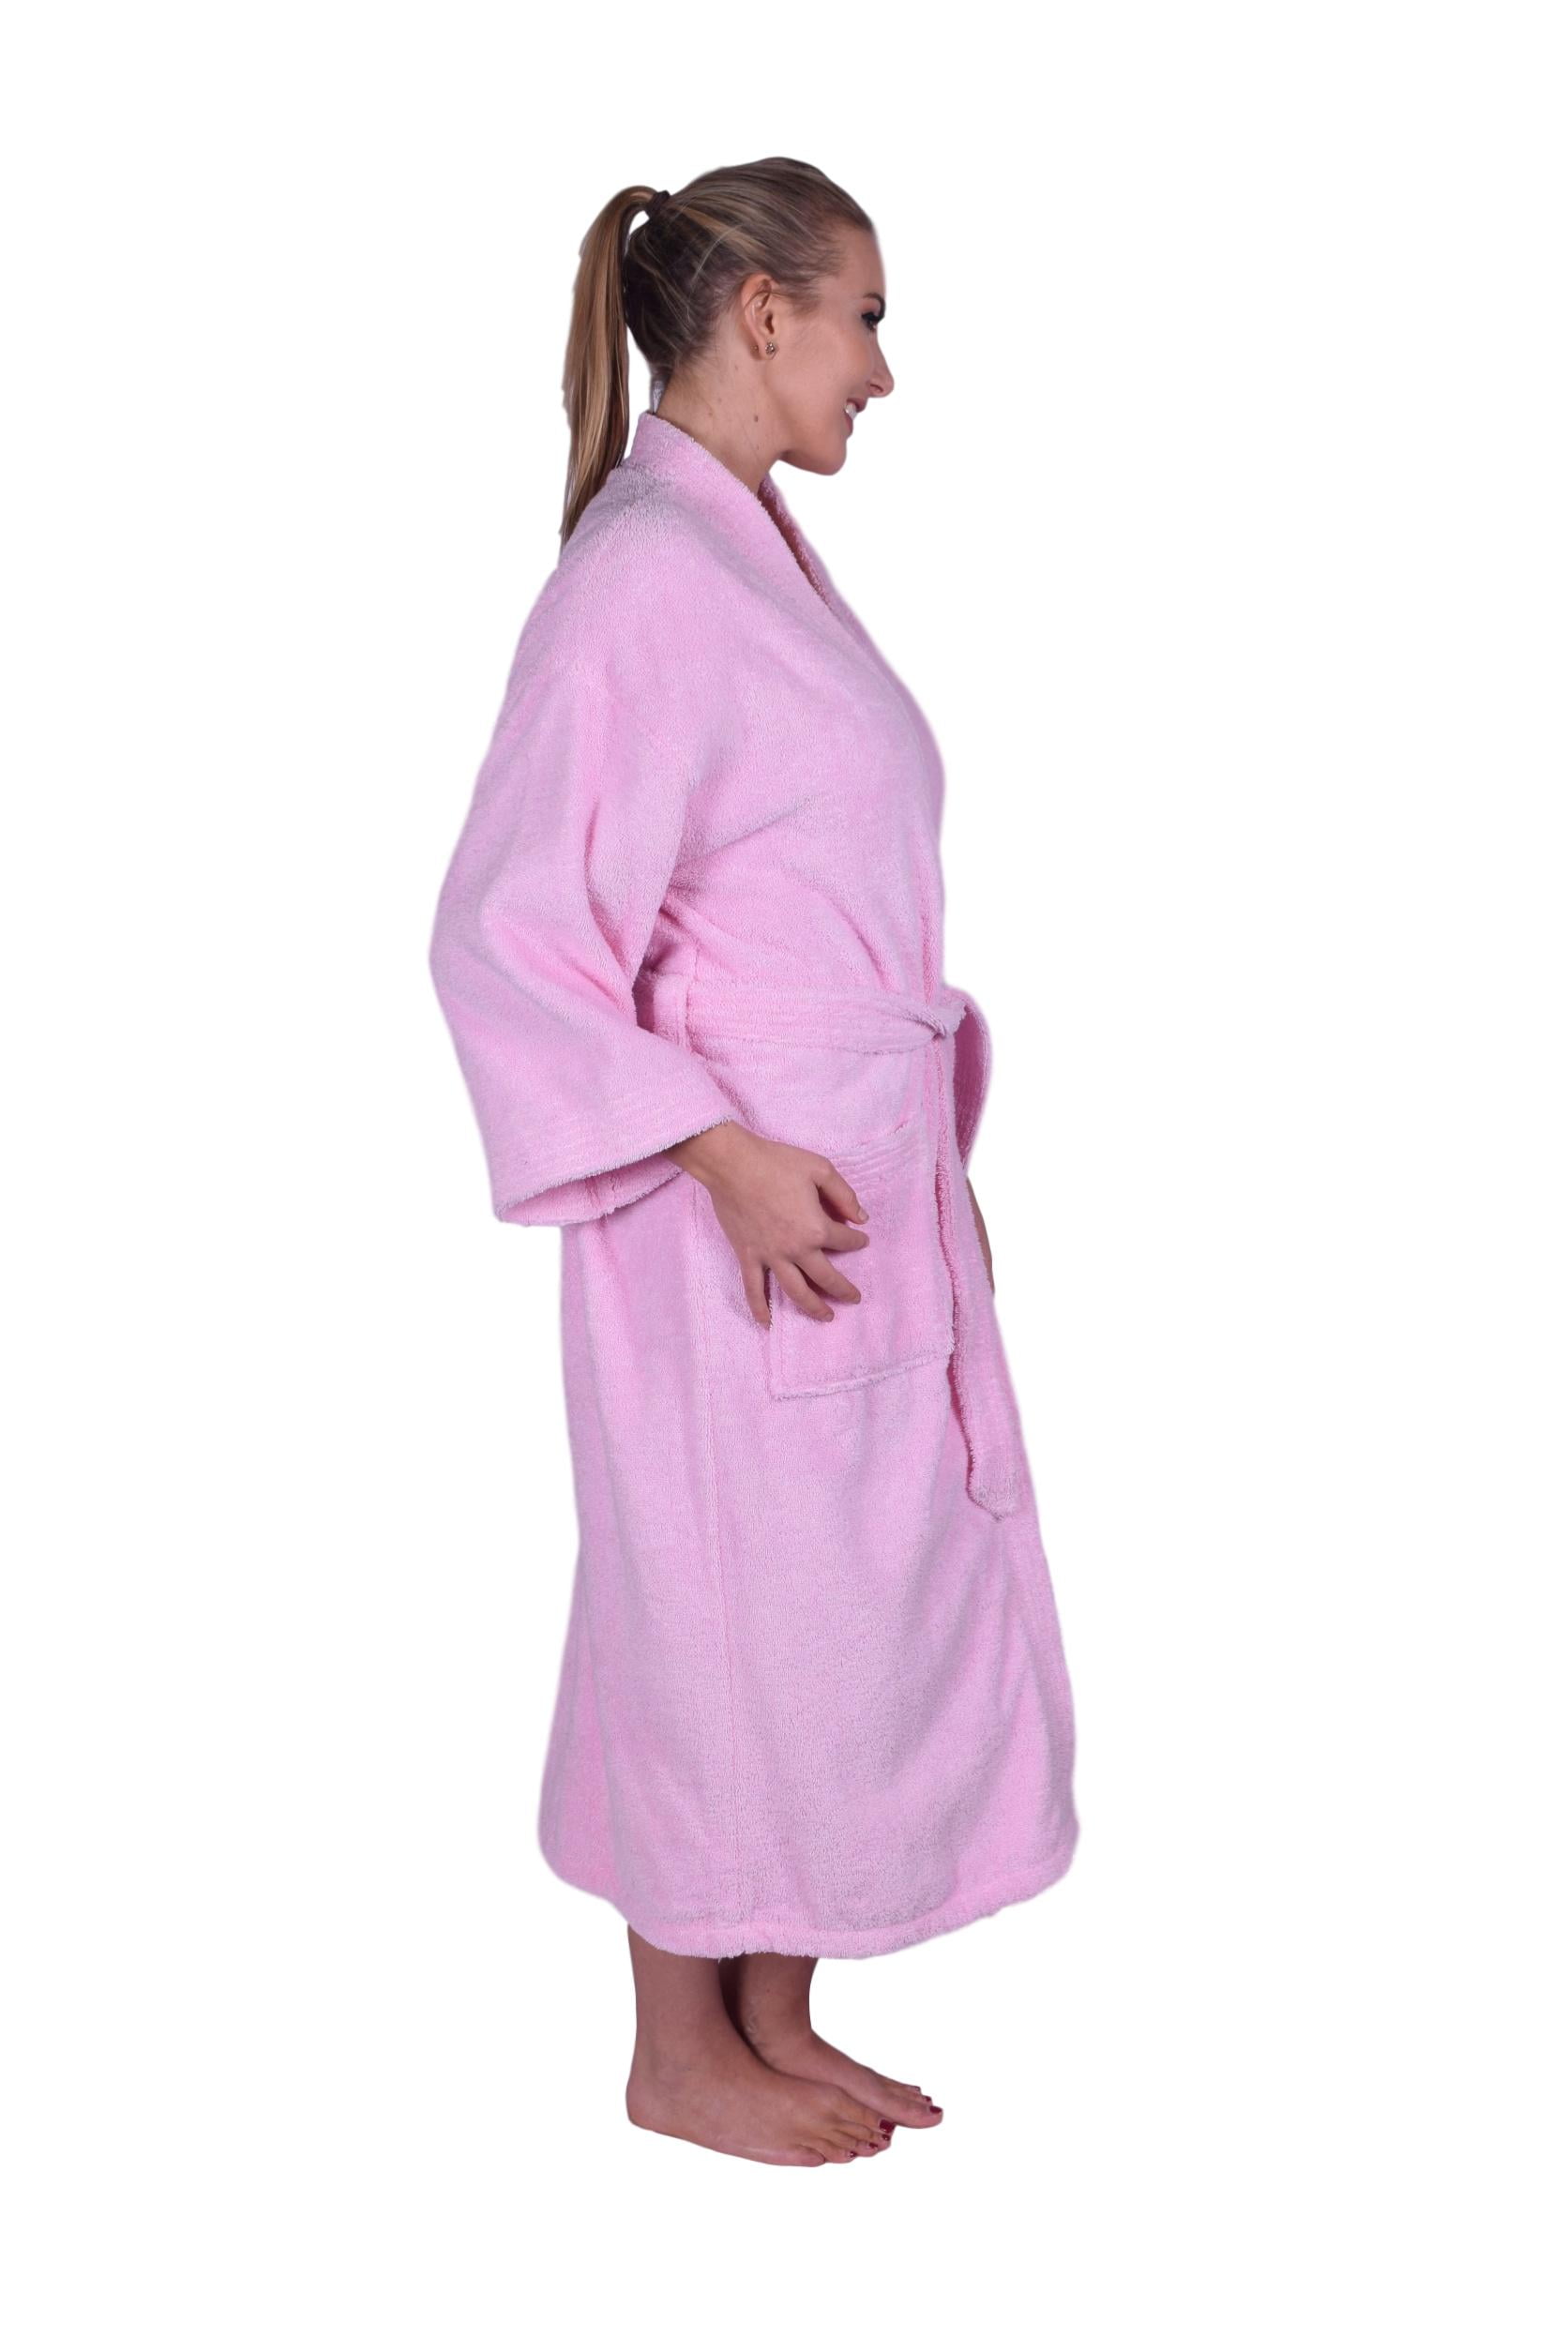 Puffy Cotton Adult Unisex Kimono Bathrobe 100% Natural Soft Cotton Robe 